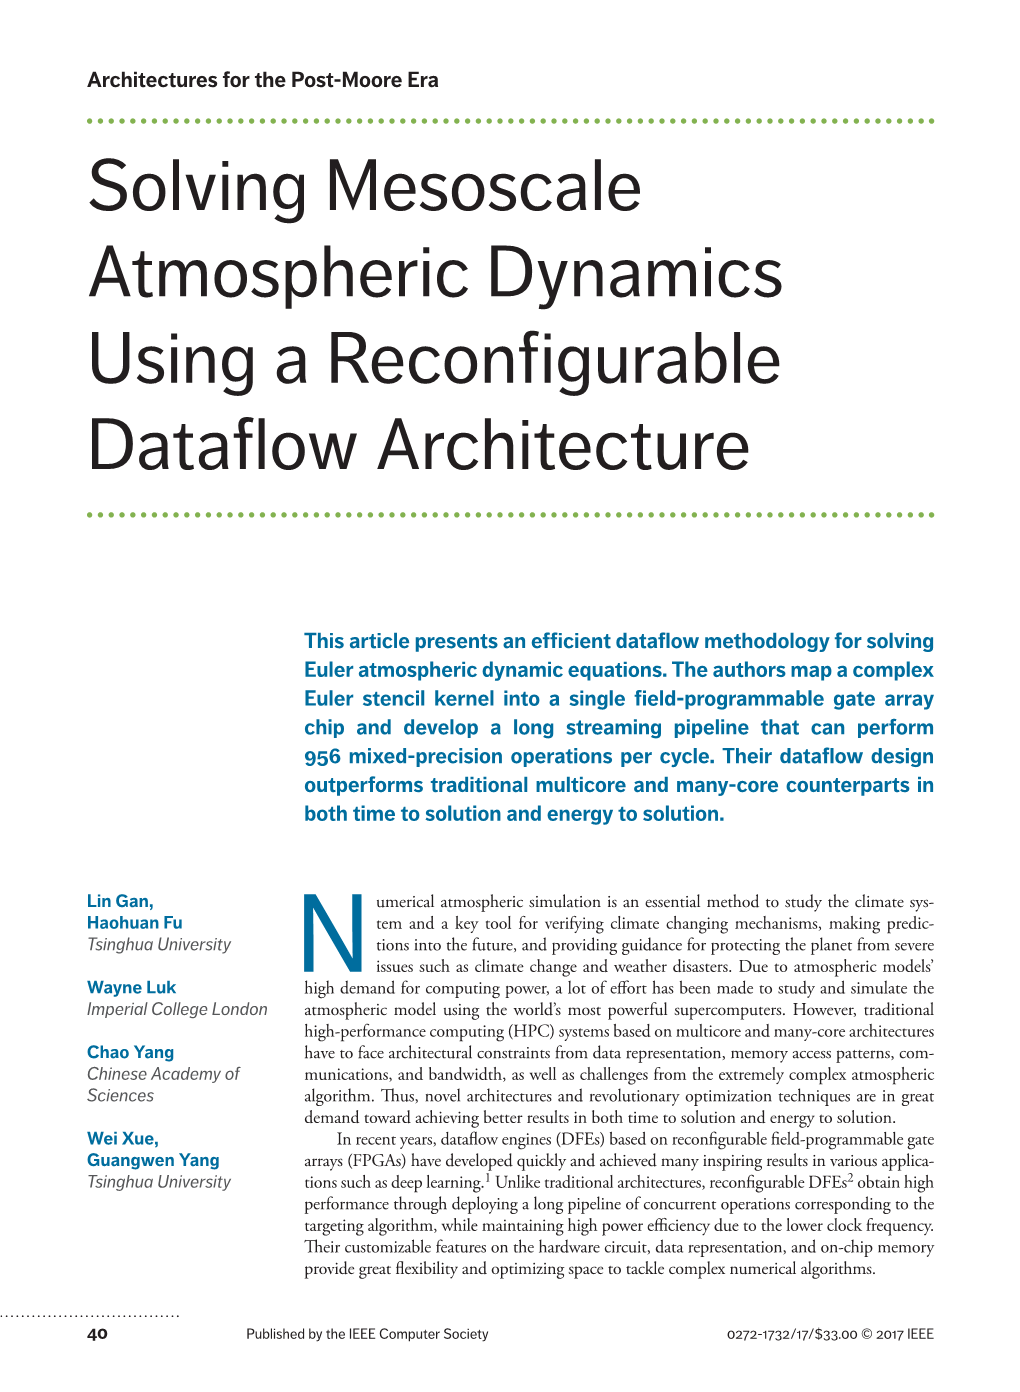 Solving Mesoscale Atmospheric Dynamics Using a Reconfigurable Dataflow Architecture